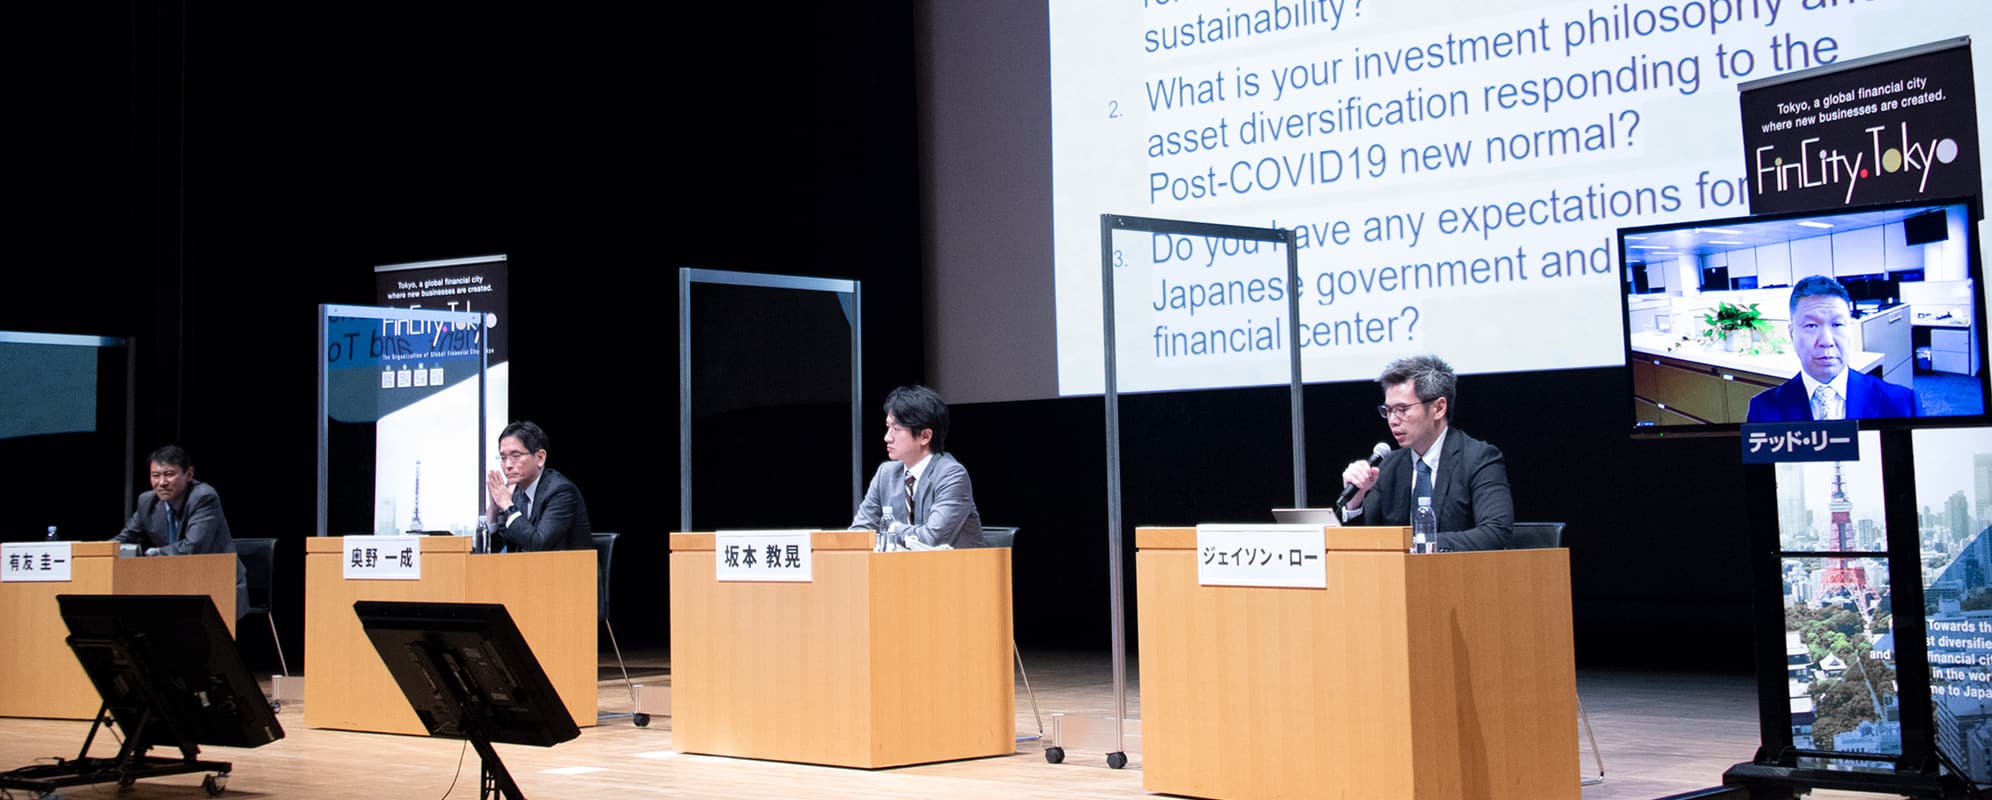 Photo:From left: Keiichi Aritomo, Kazushige Okuno, Noriaki Sakamoto, Jason Low, Ted Lee